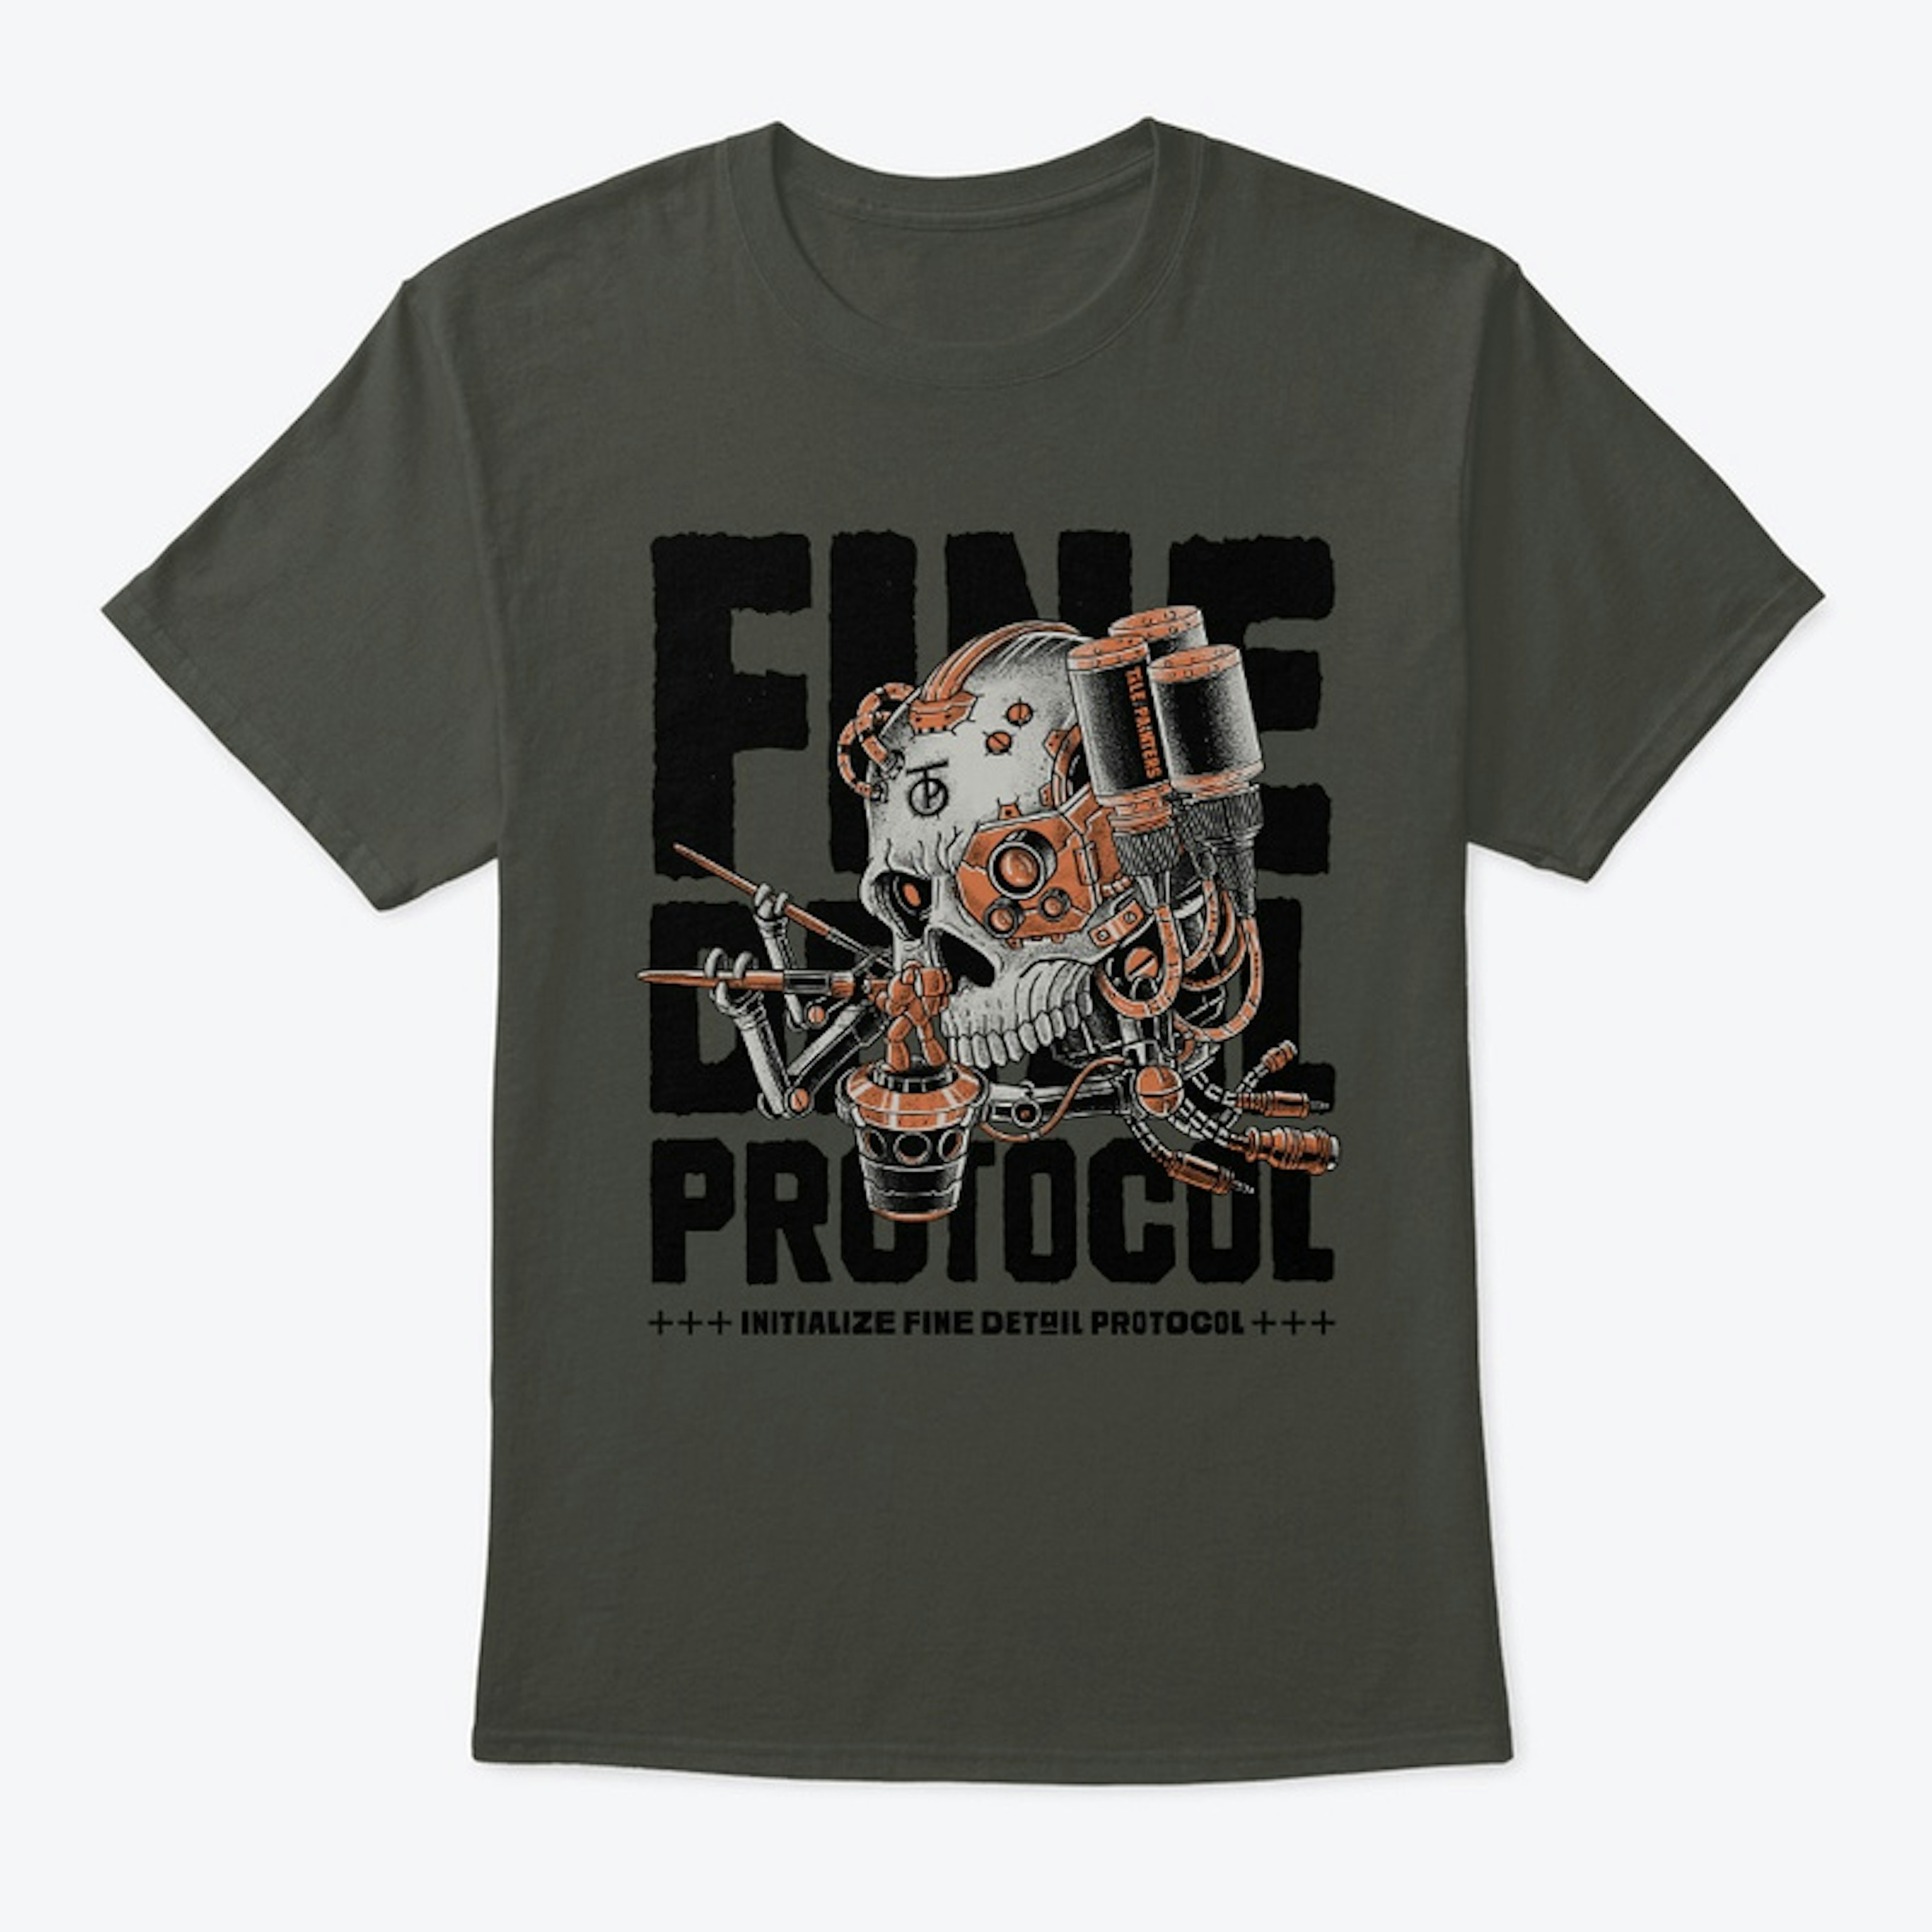 FINE DETAIL PROTOCOL T-Shirt